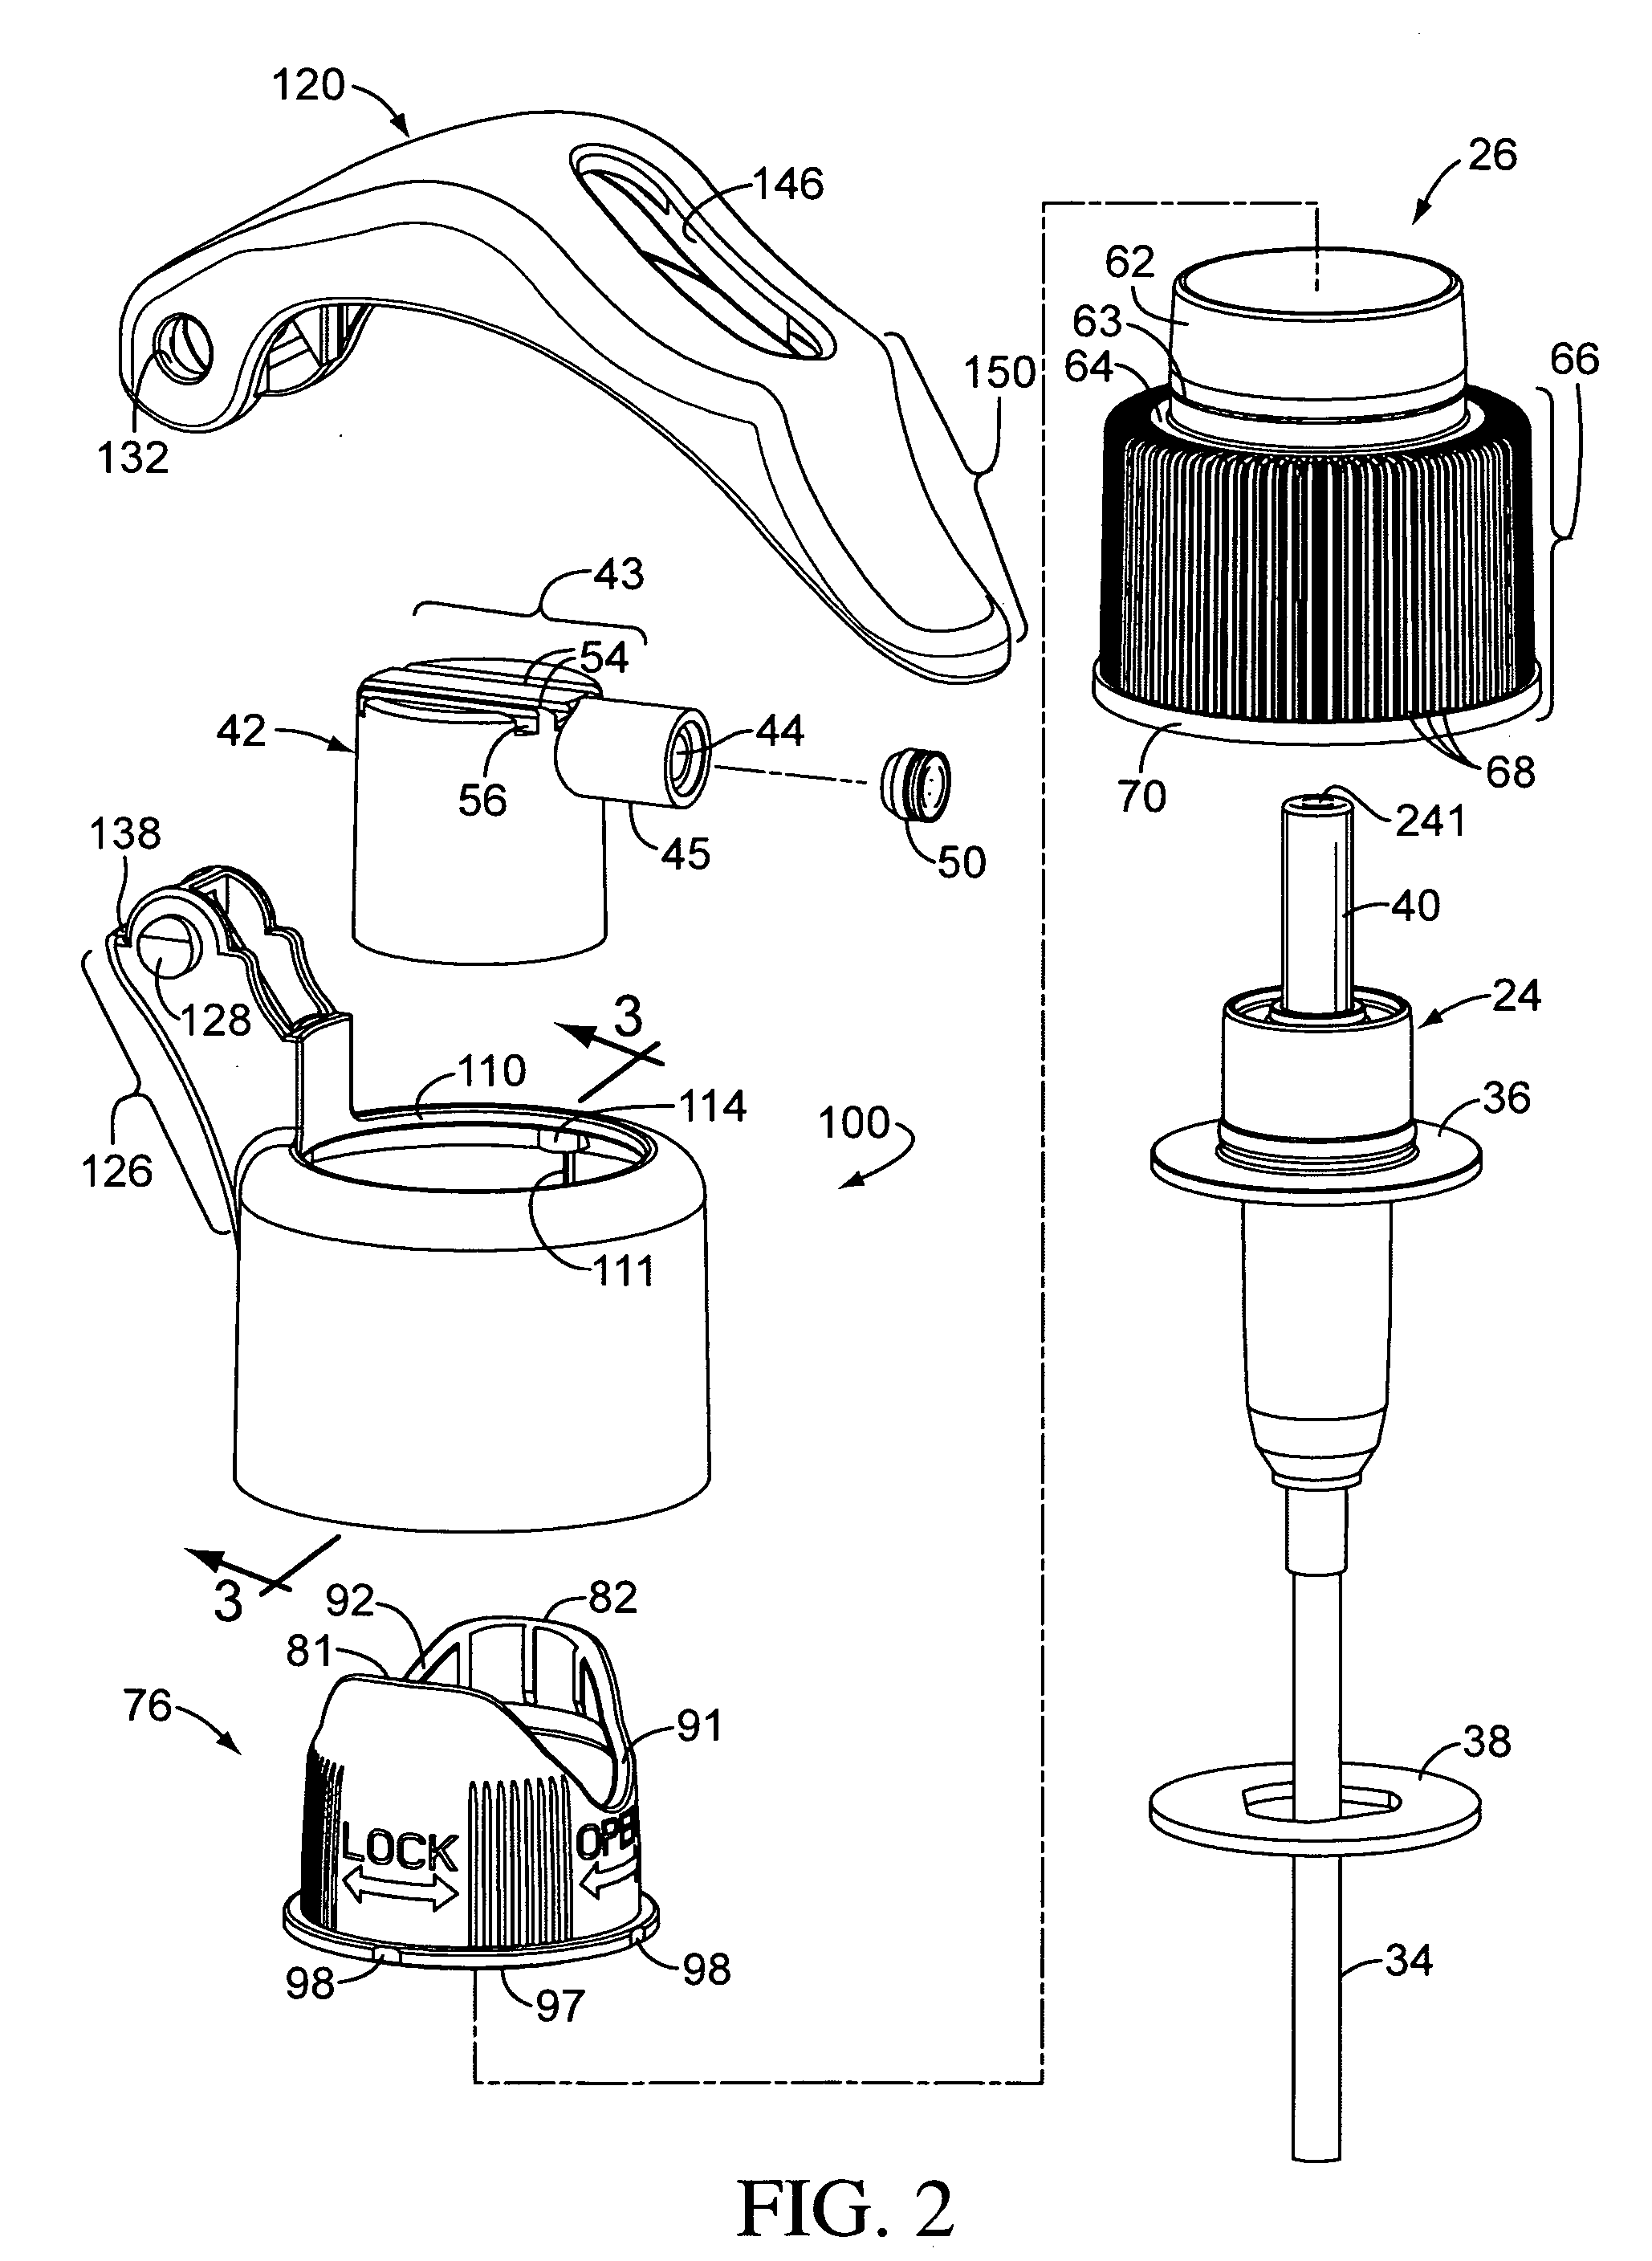 Dispenser with lock